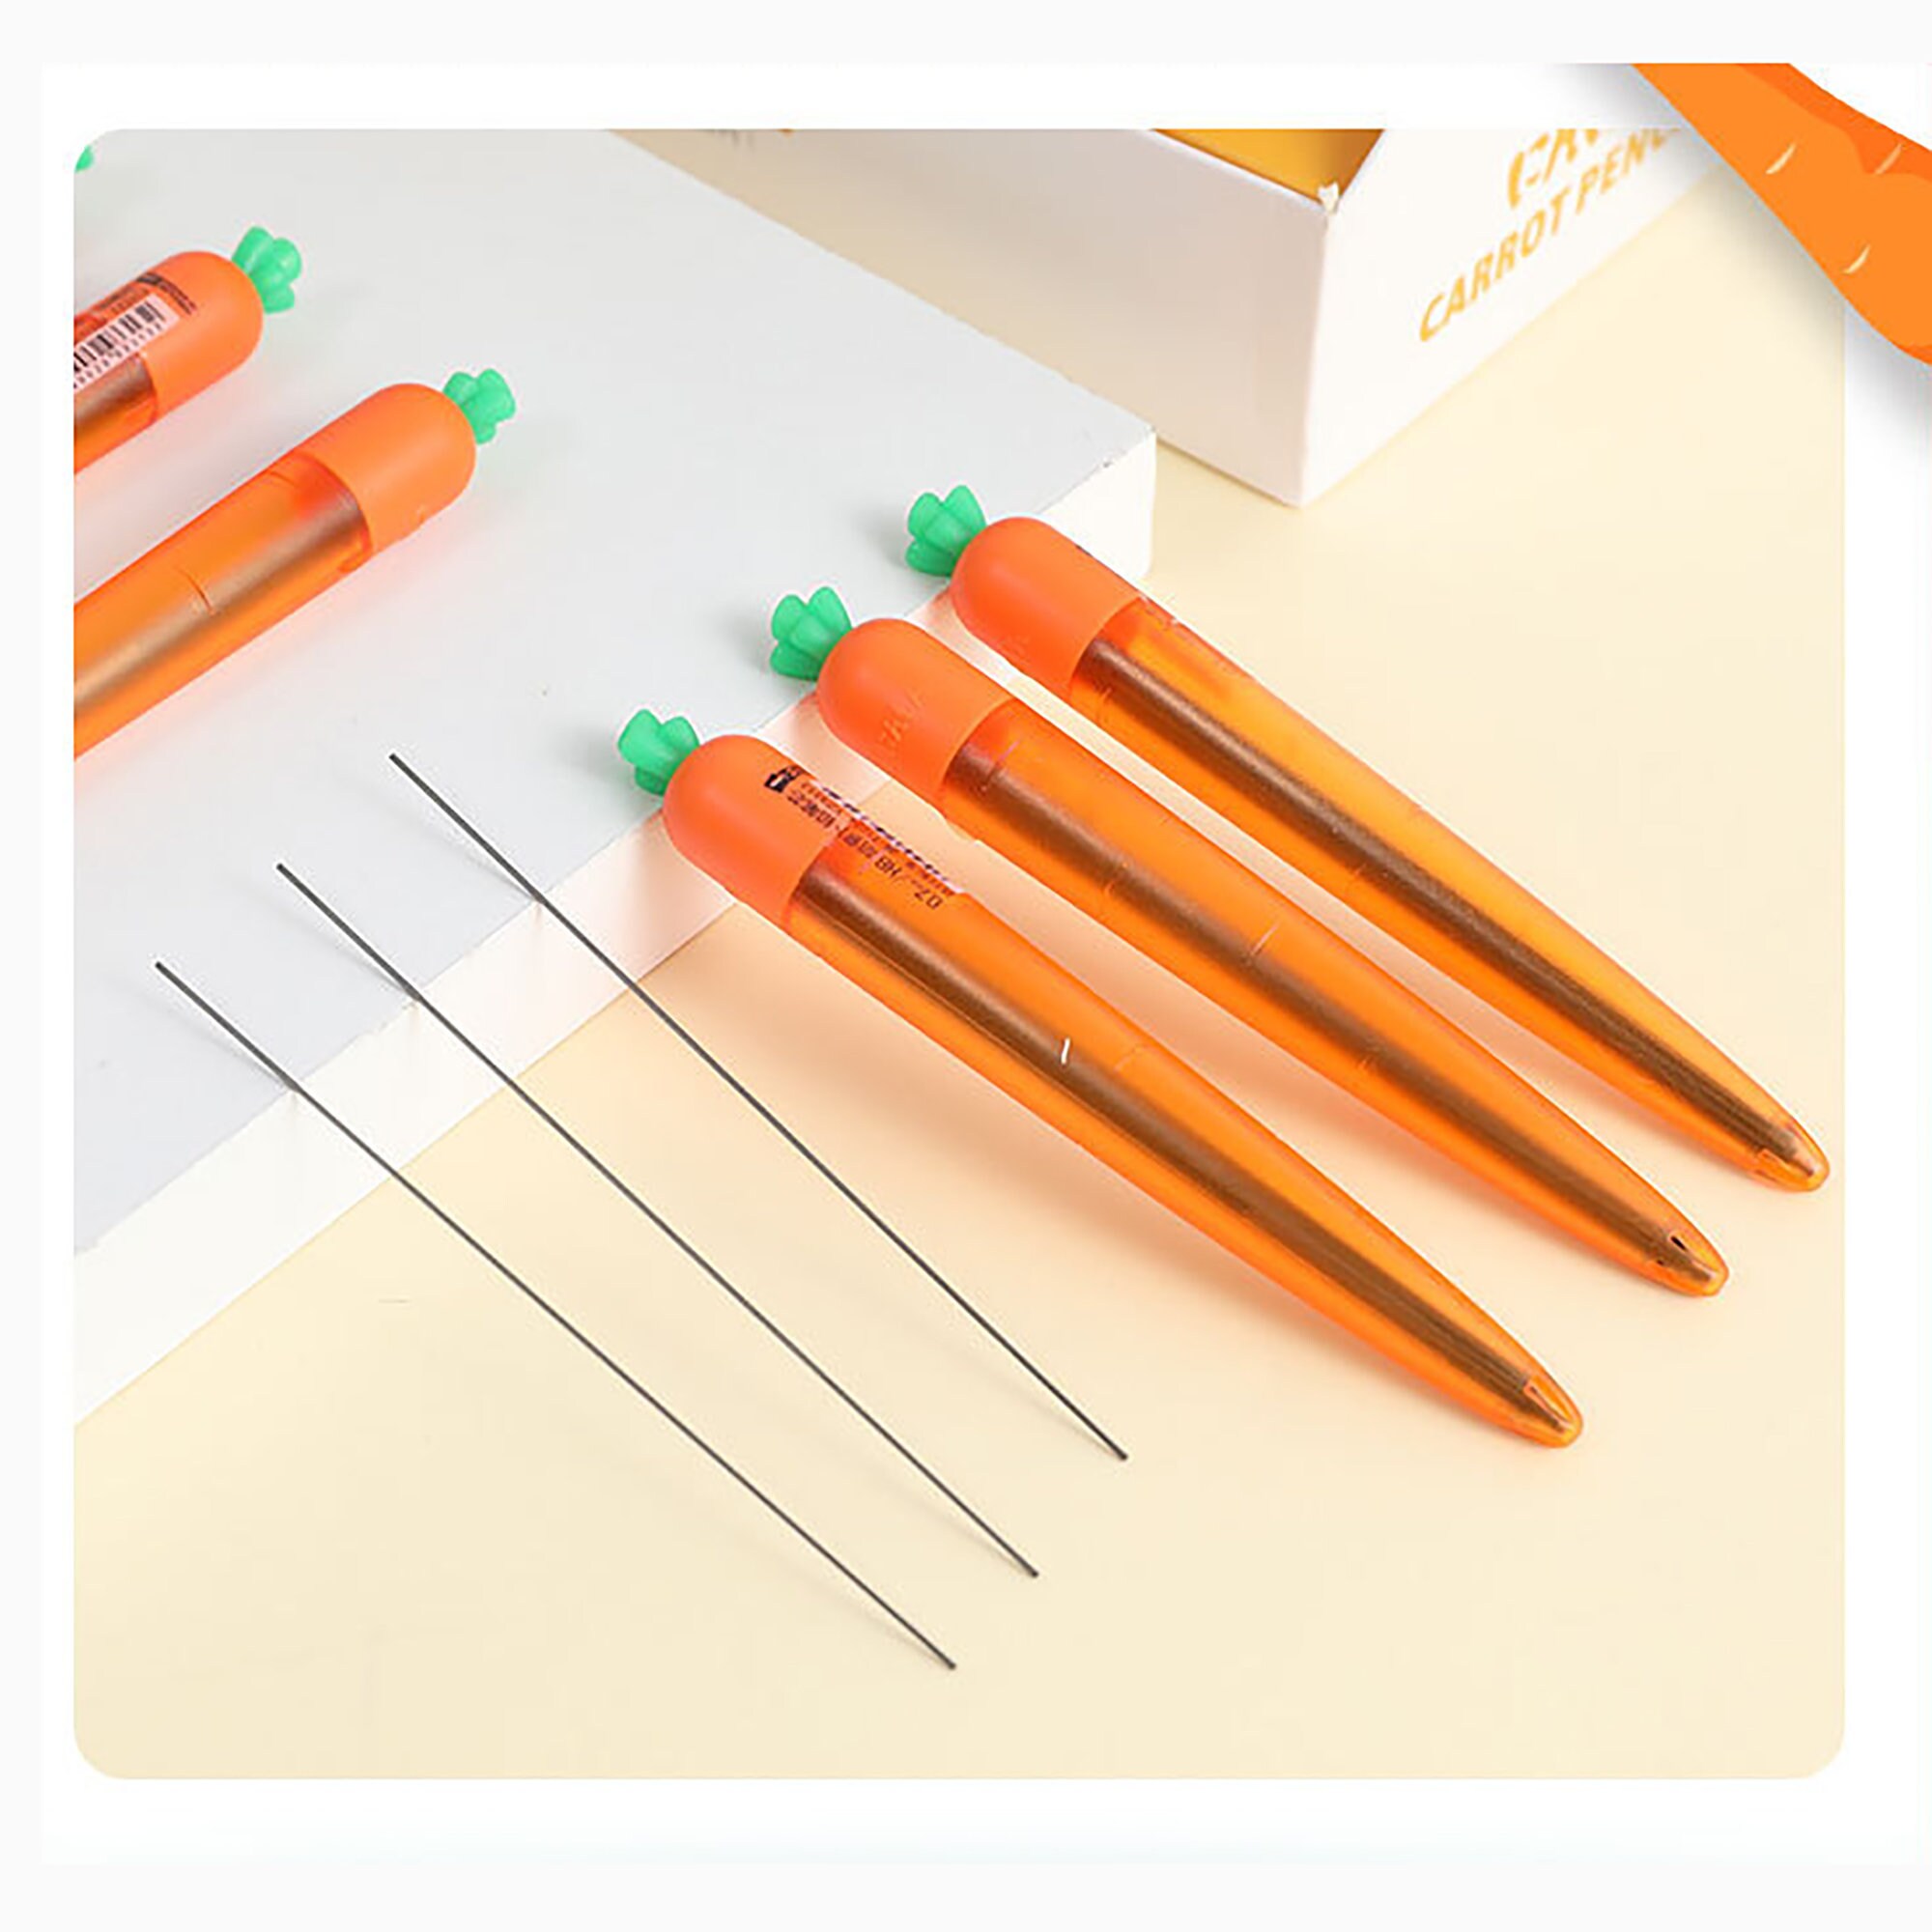 Kawaii Cute Cartoon Mechanical Pencil Set with Lead Refill and